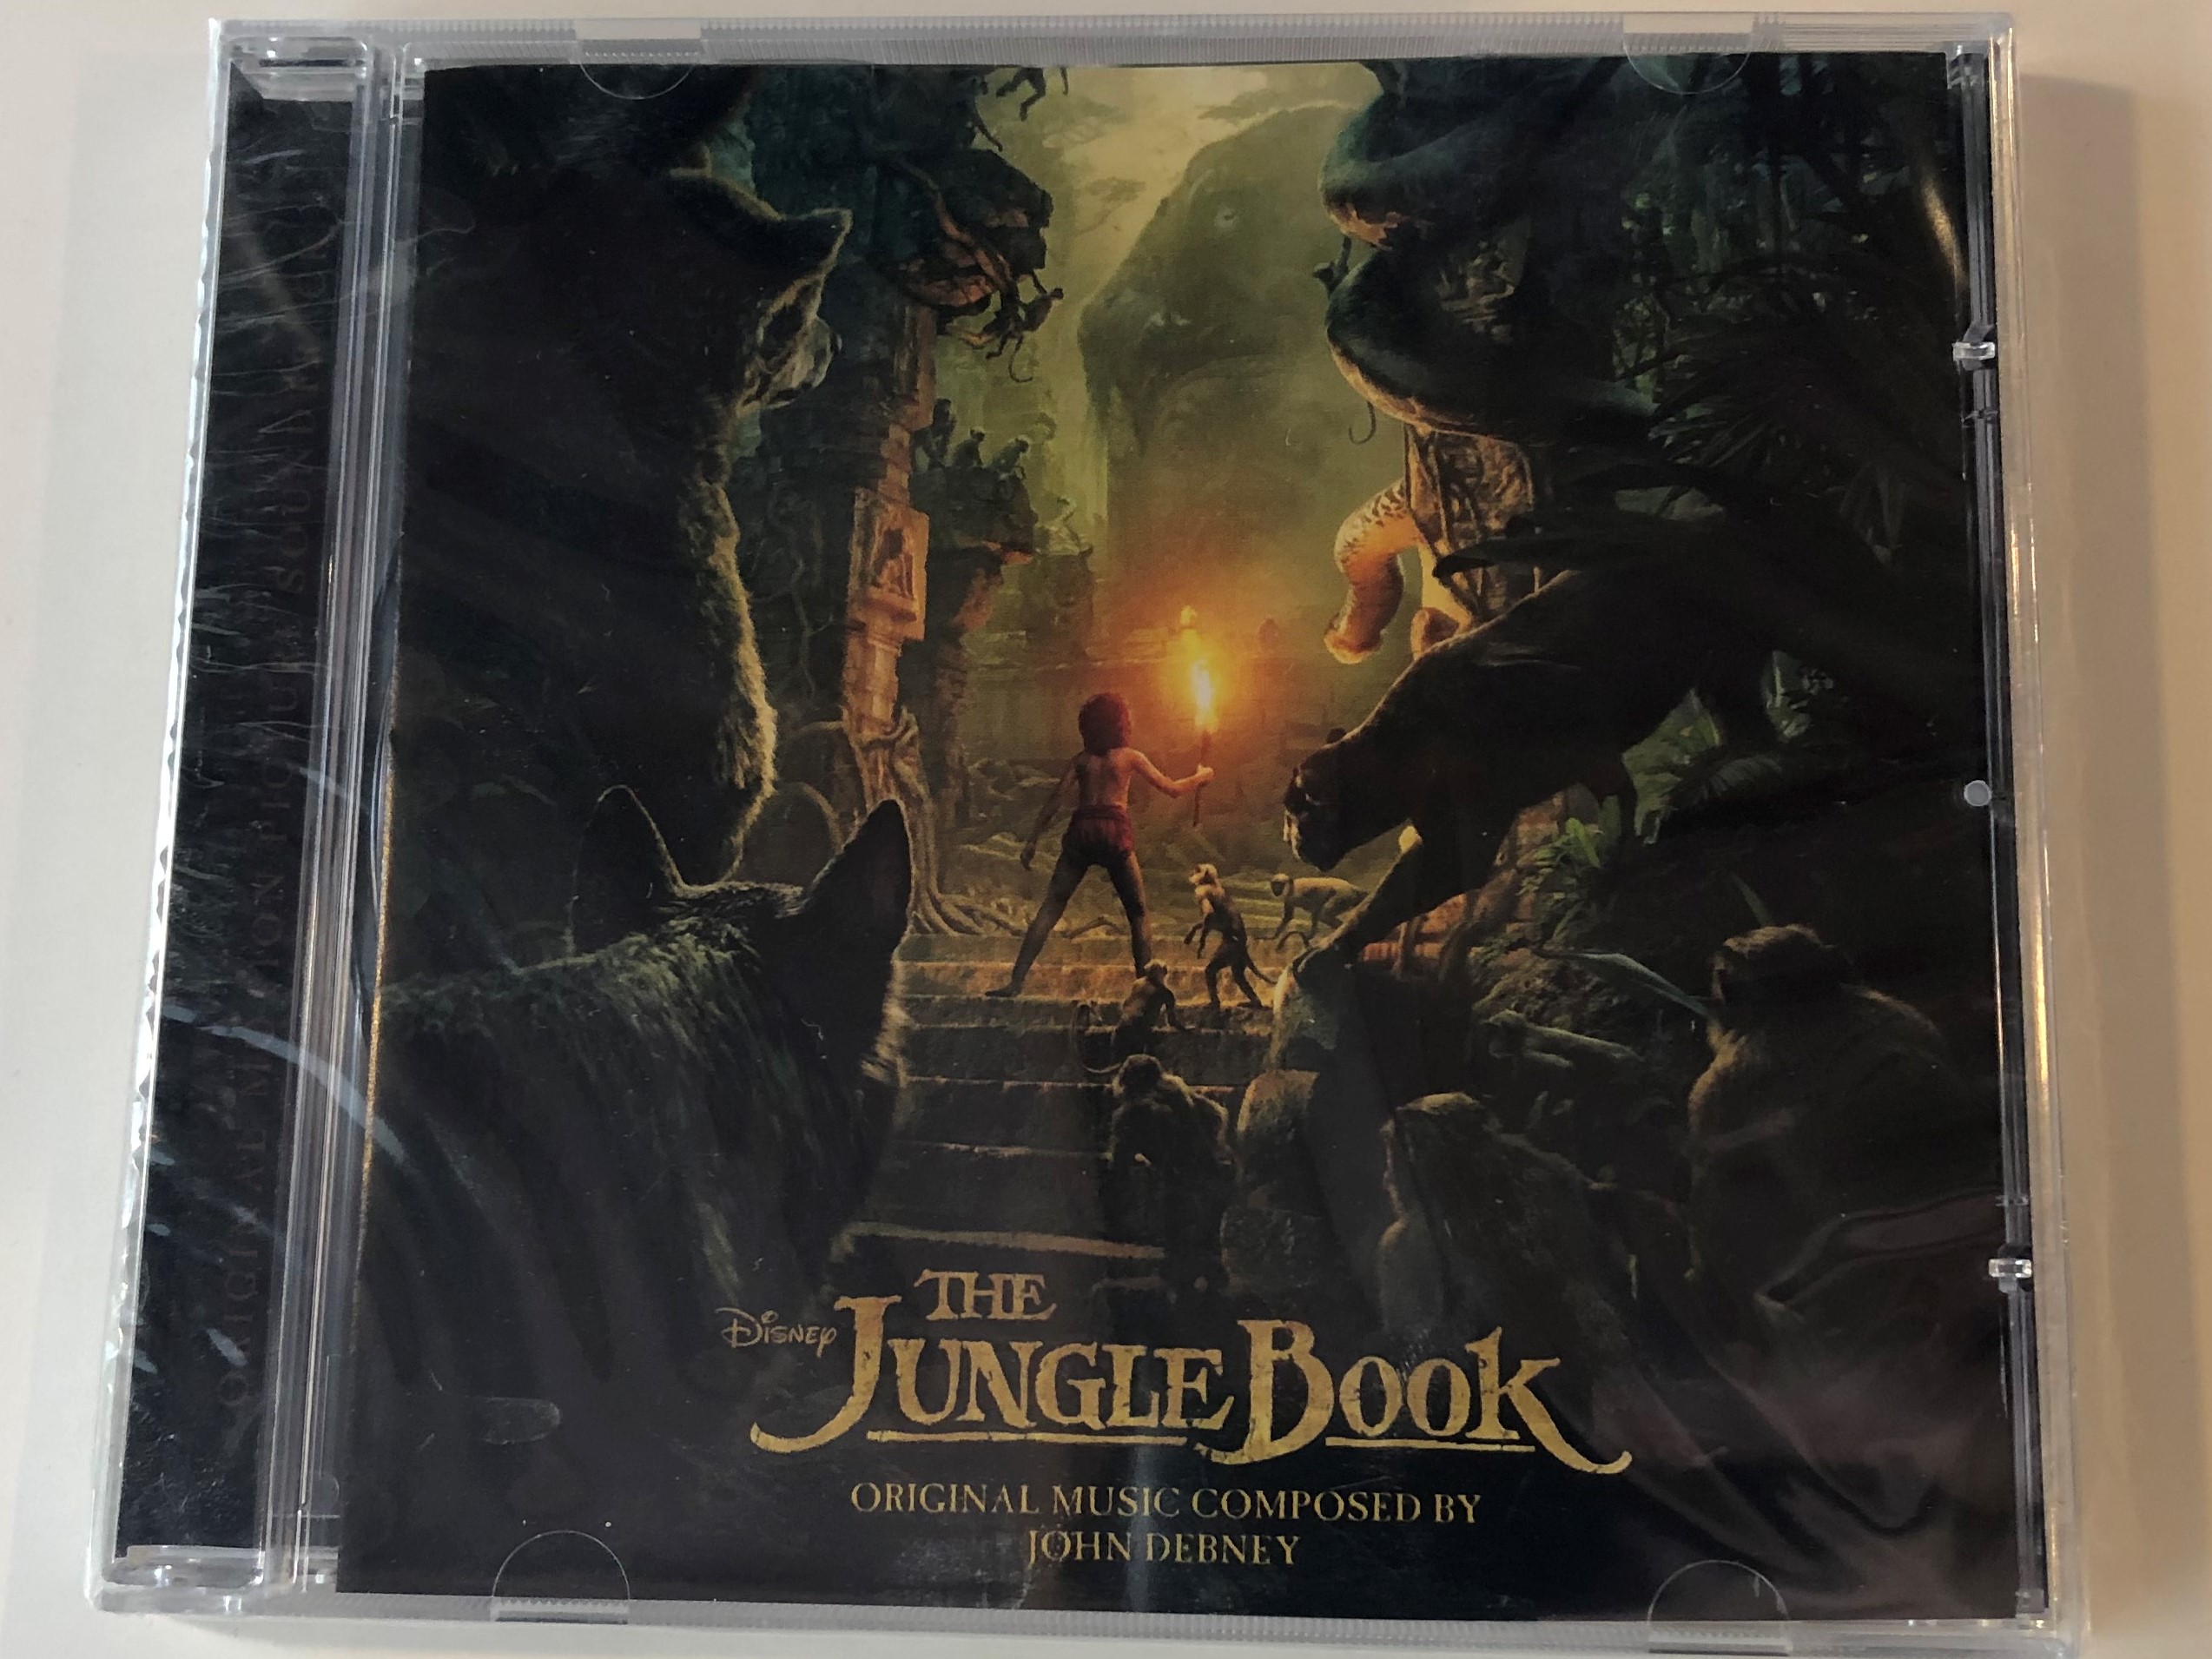 the-jungle-book-original-motion-picture-soundtrack-by-john-debney-walt-disney-records-audio-cd-2016-00050087344368-1-.jpg